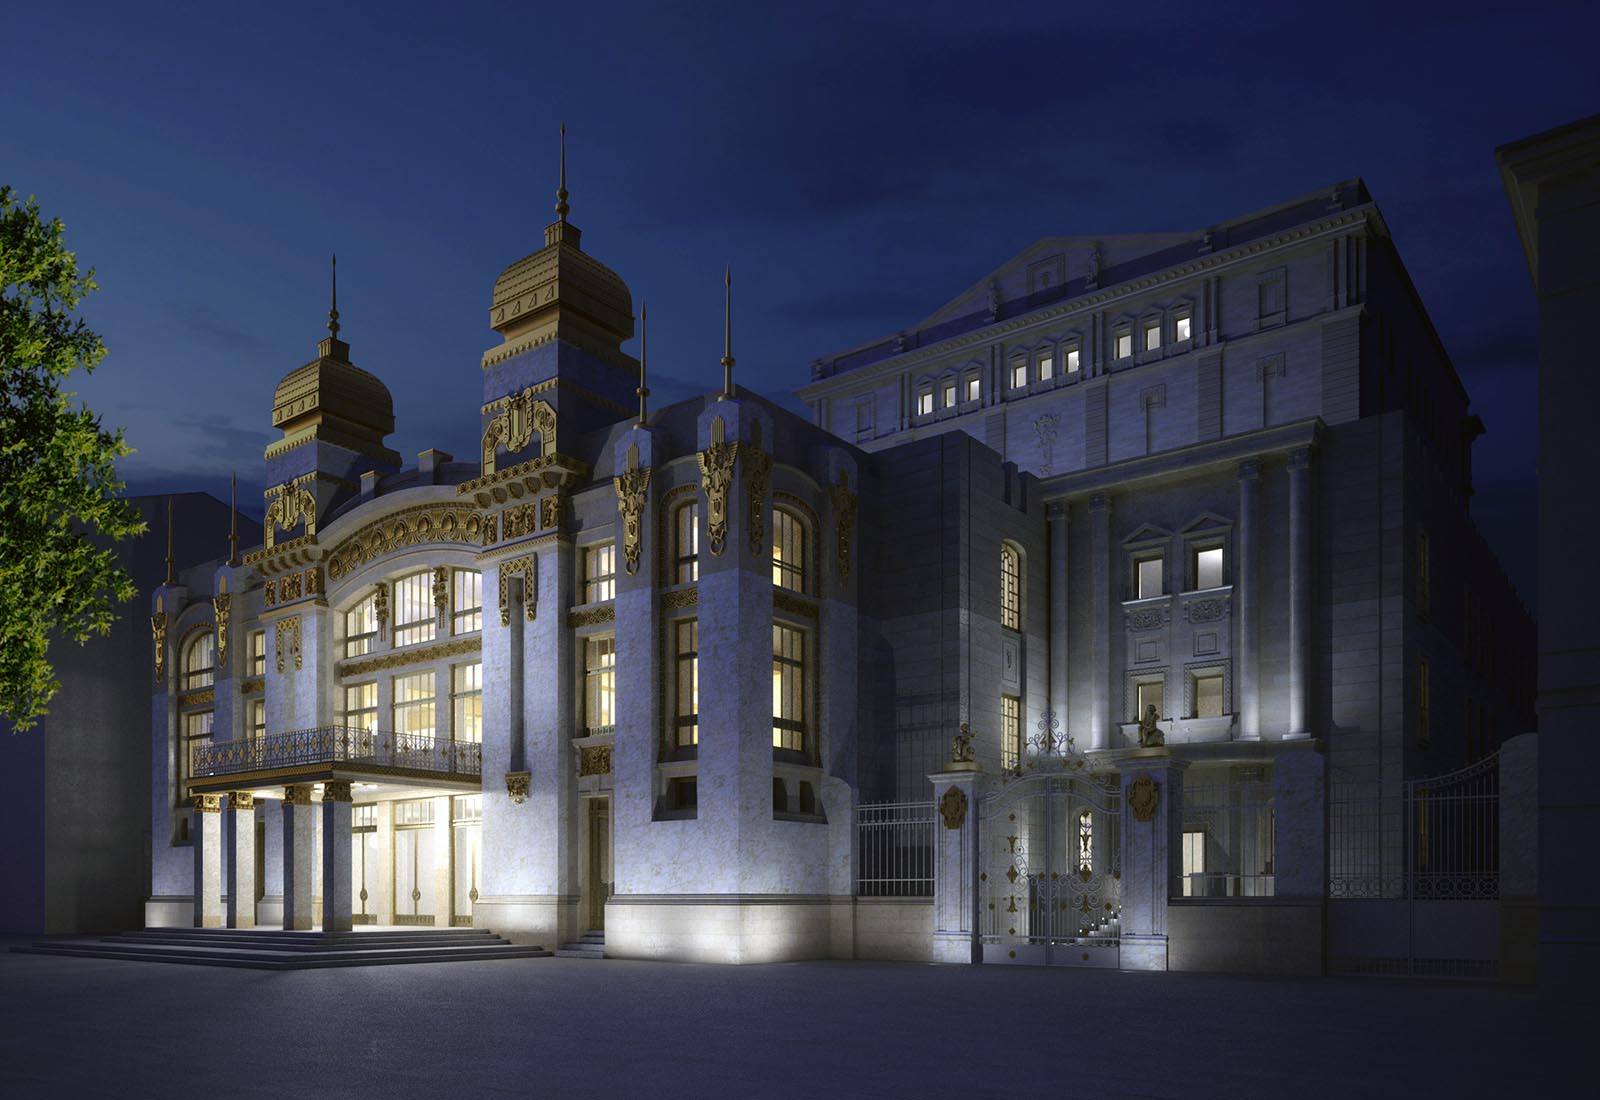 Baku Opera and Ballet Theatre - Vista notturna da sud ovest